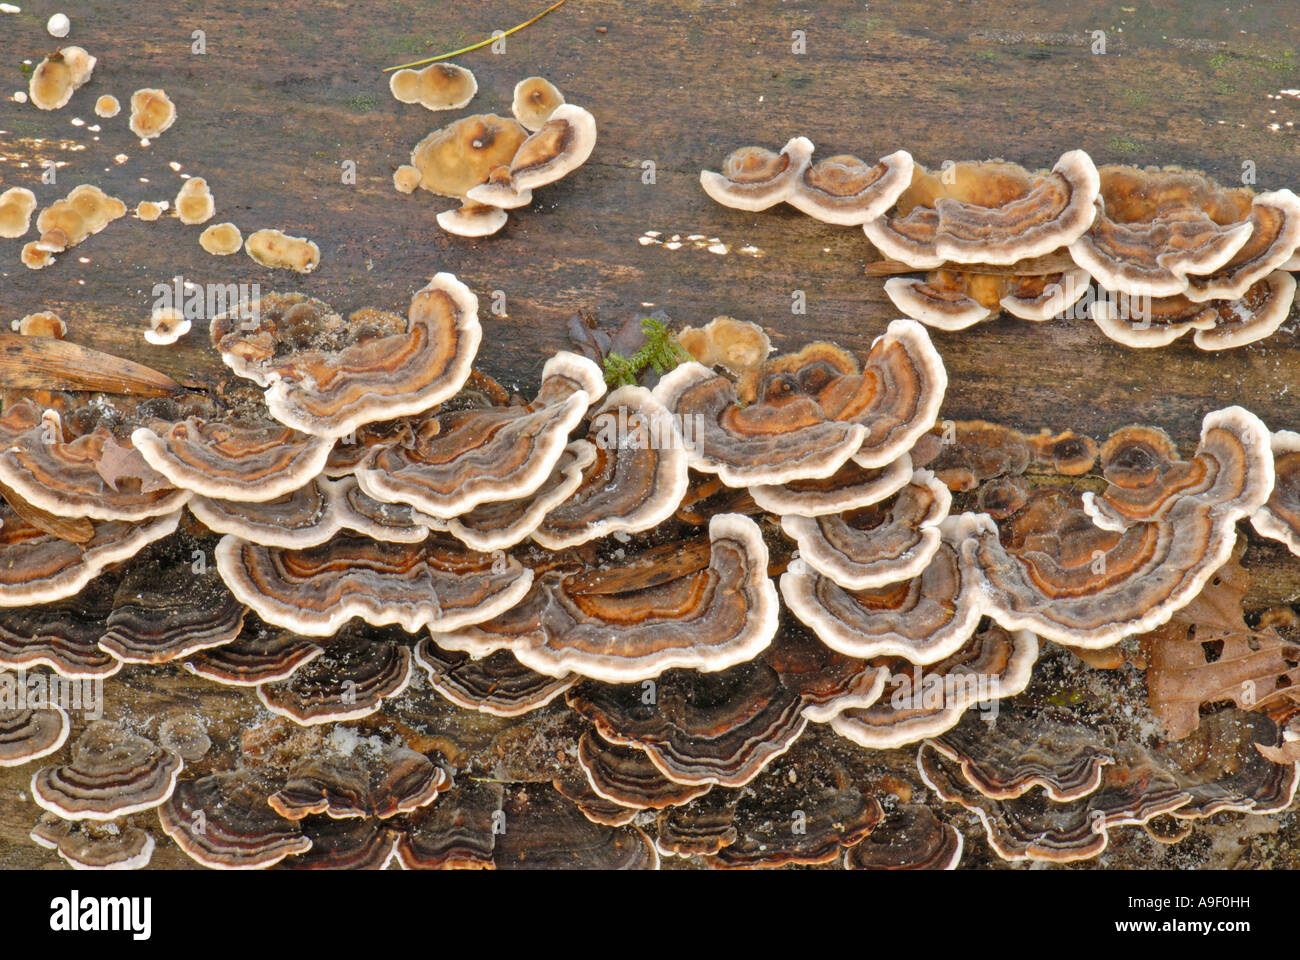 Queue de la Turquie, de champignons polypores multicolores (Trametes versicolor, Coriolus versicolor) sur bois Banque D'Images